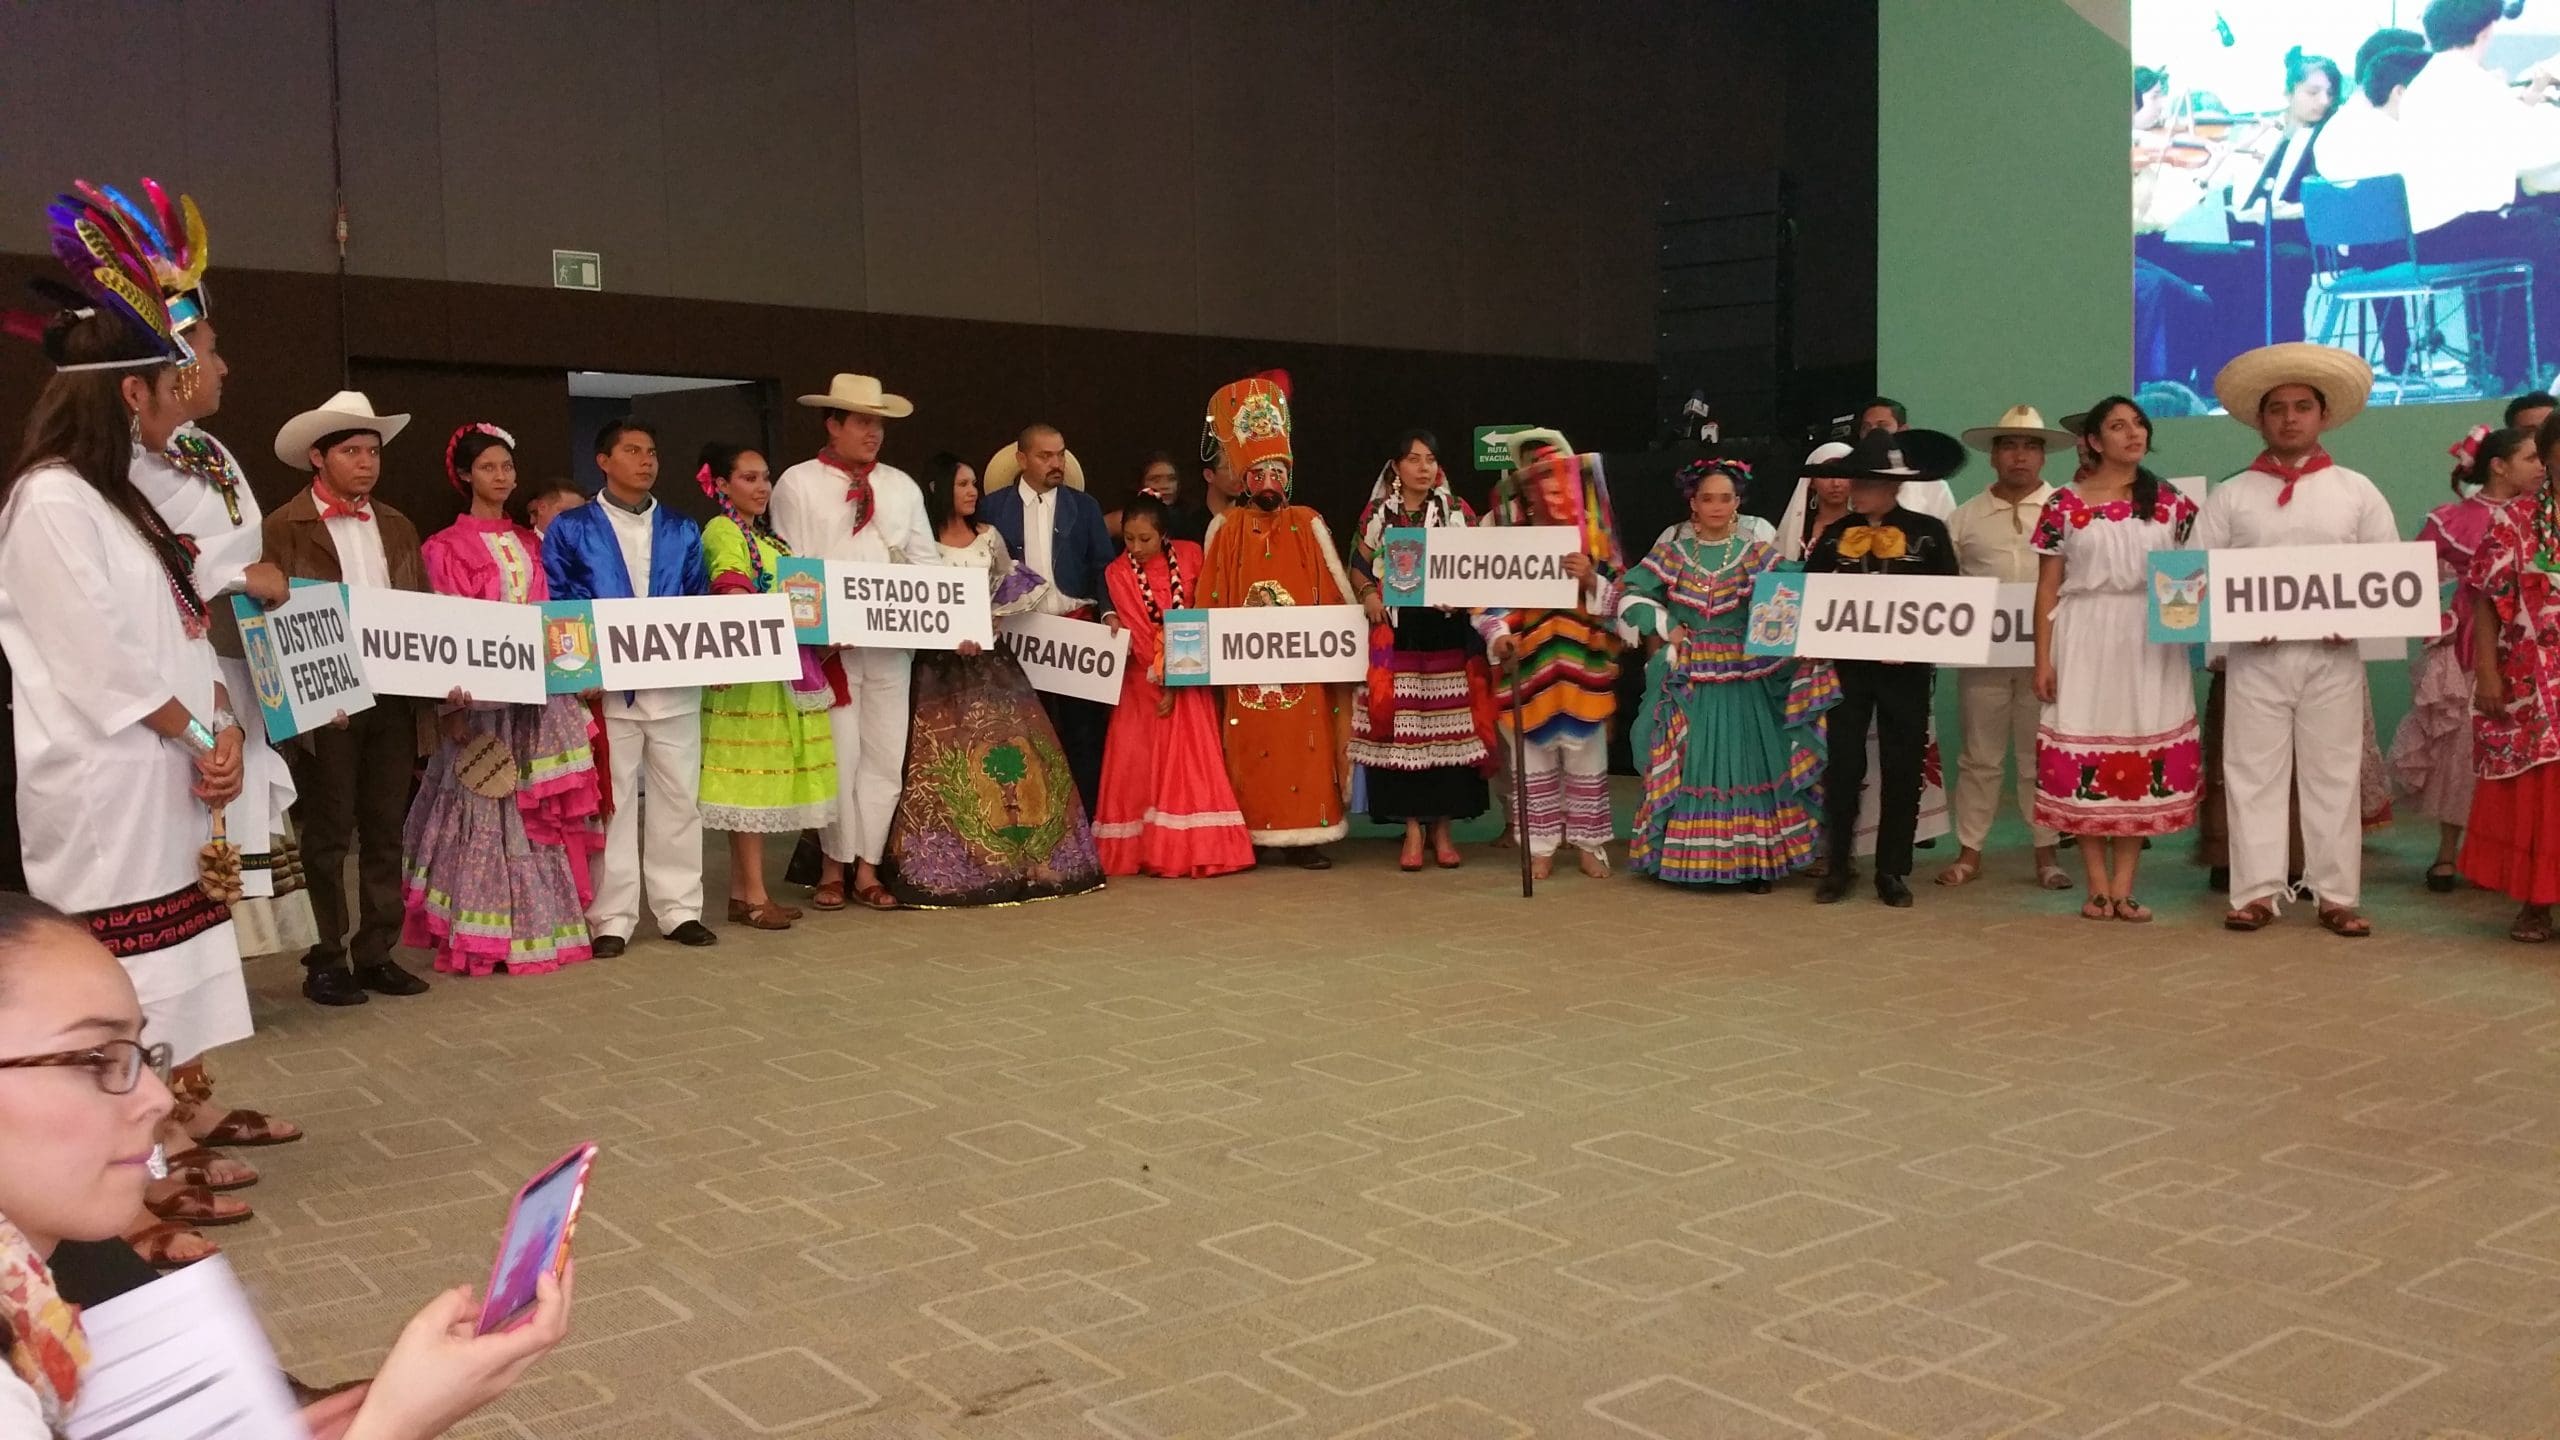 Viva la prevencion! CADCA Celebrates Healthy Lives at International Addiction Congress in Mexico